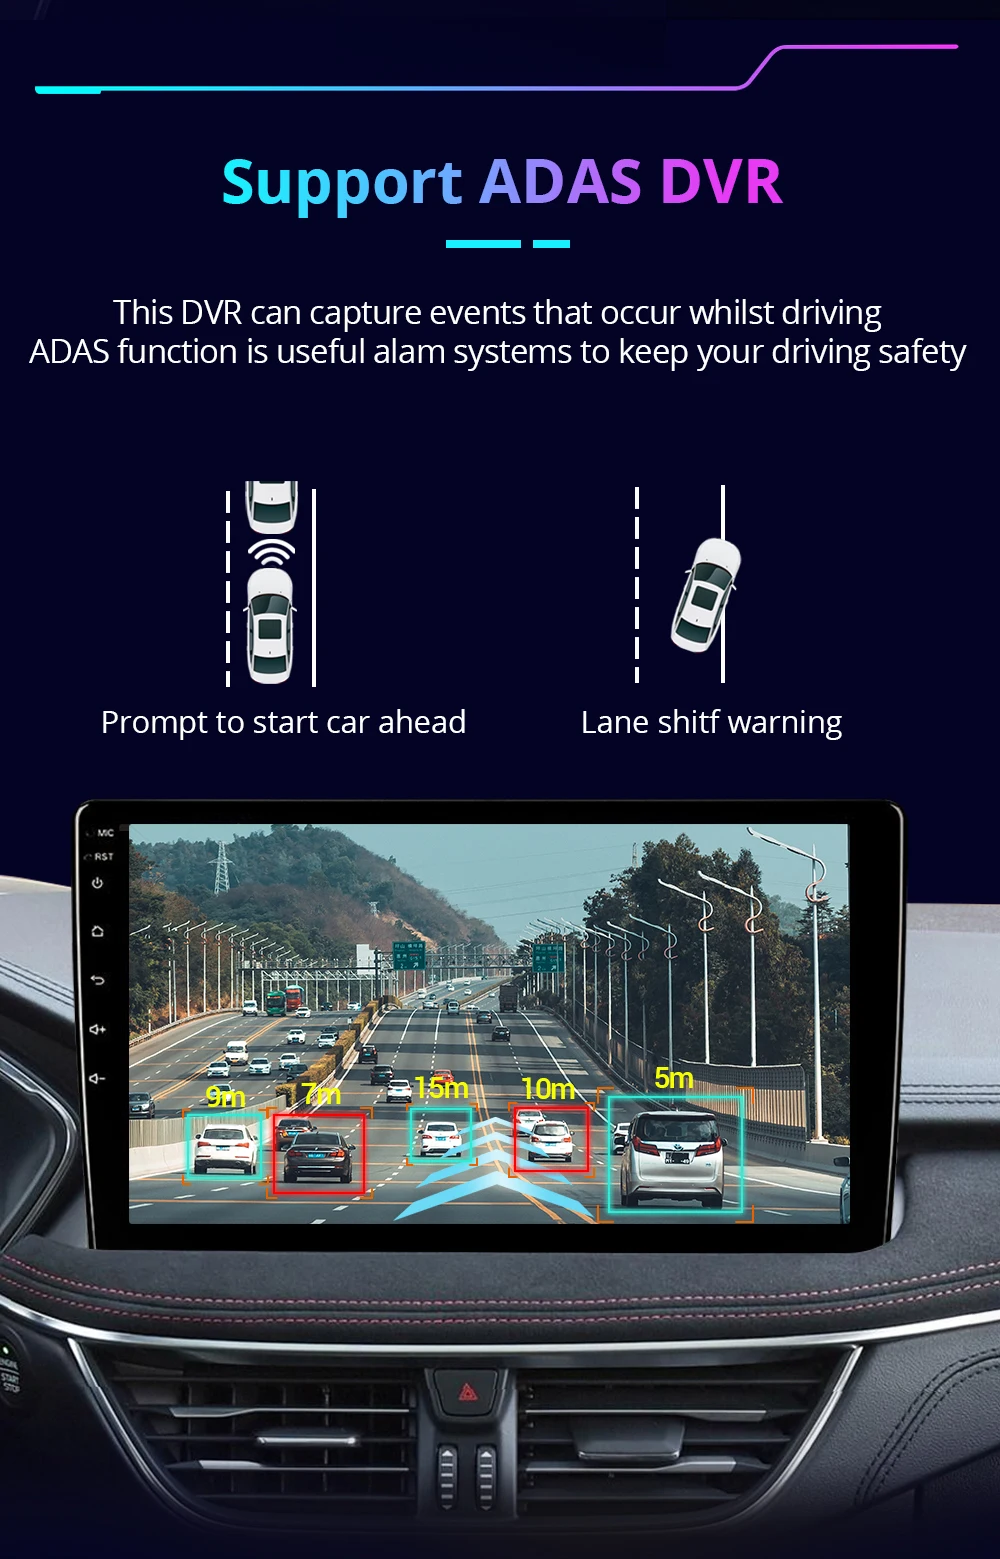 car bluetooth video player Car Radio For Hyundai Verna Solaris Accent 2010-2016 2 Din Android10 Stereo Receiver 6G+128G Car Multimedia Player Carplay Video car media player hdmi